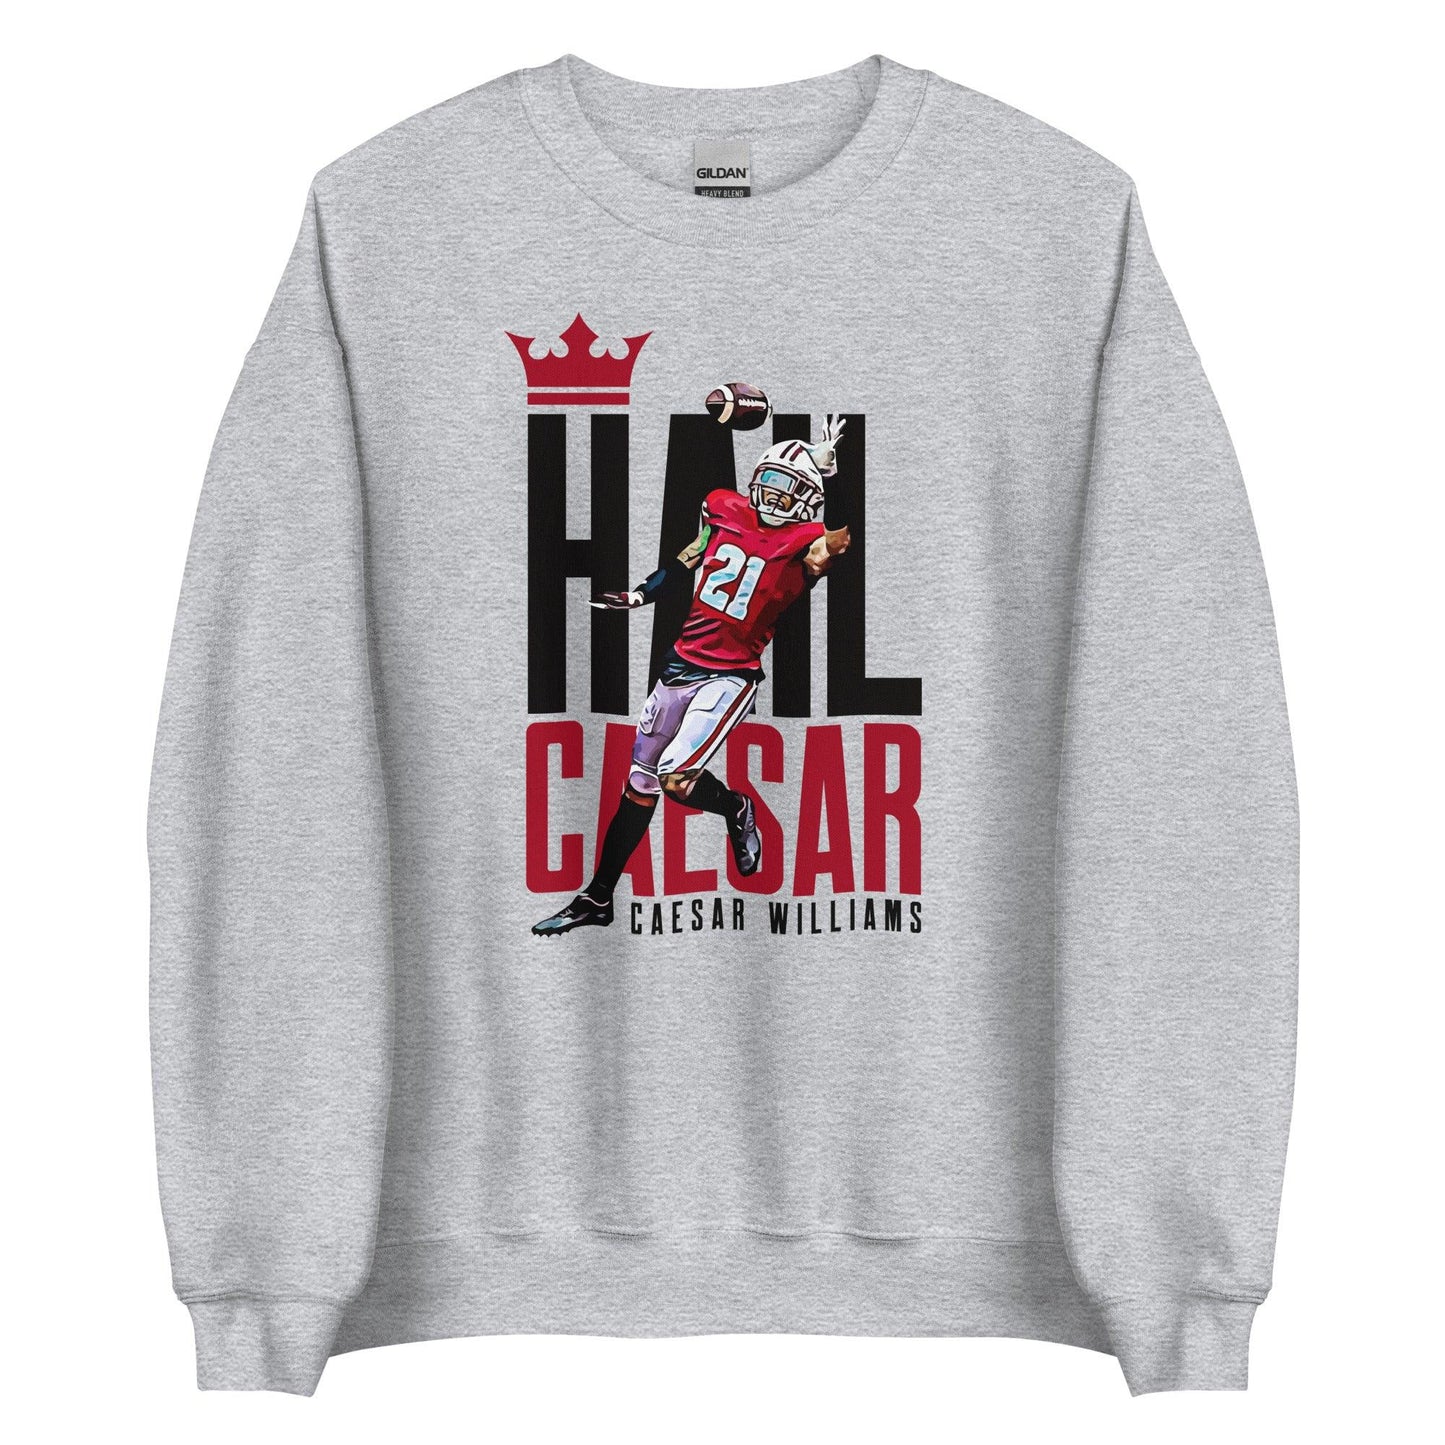 Caesar Williams "Crowned" Sweatshirt - Fan Arch